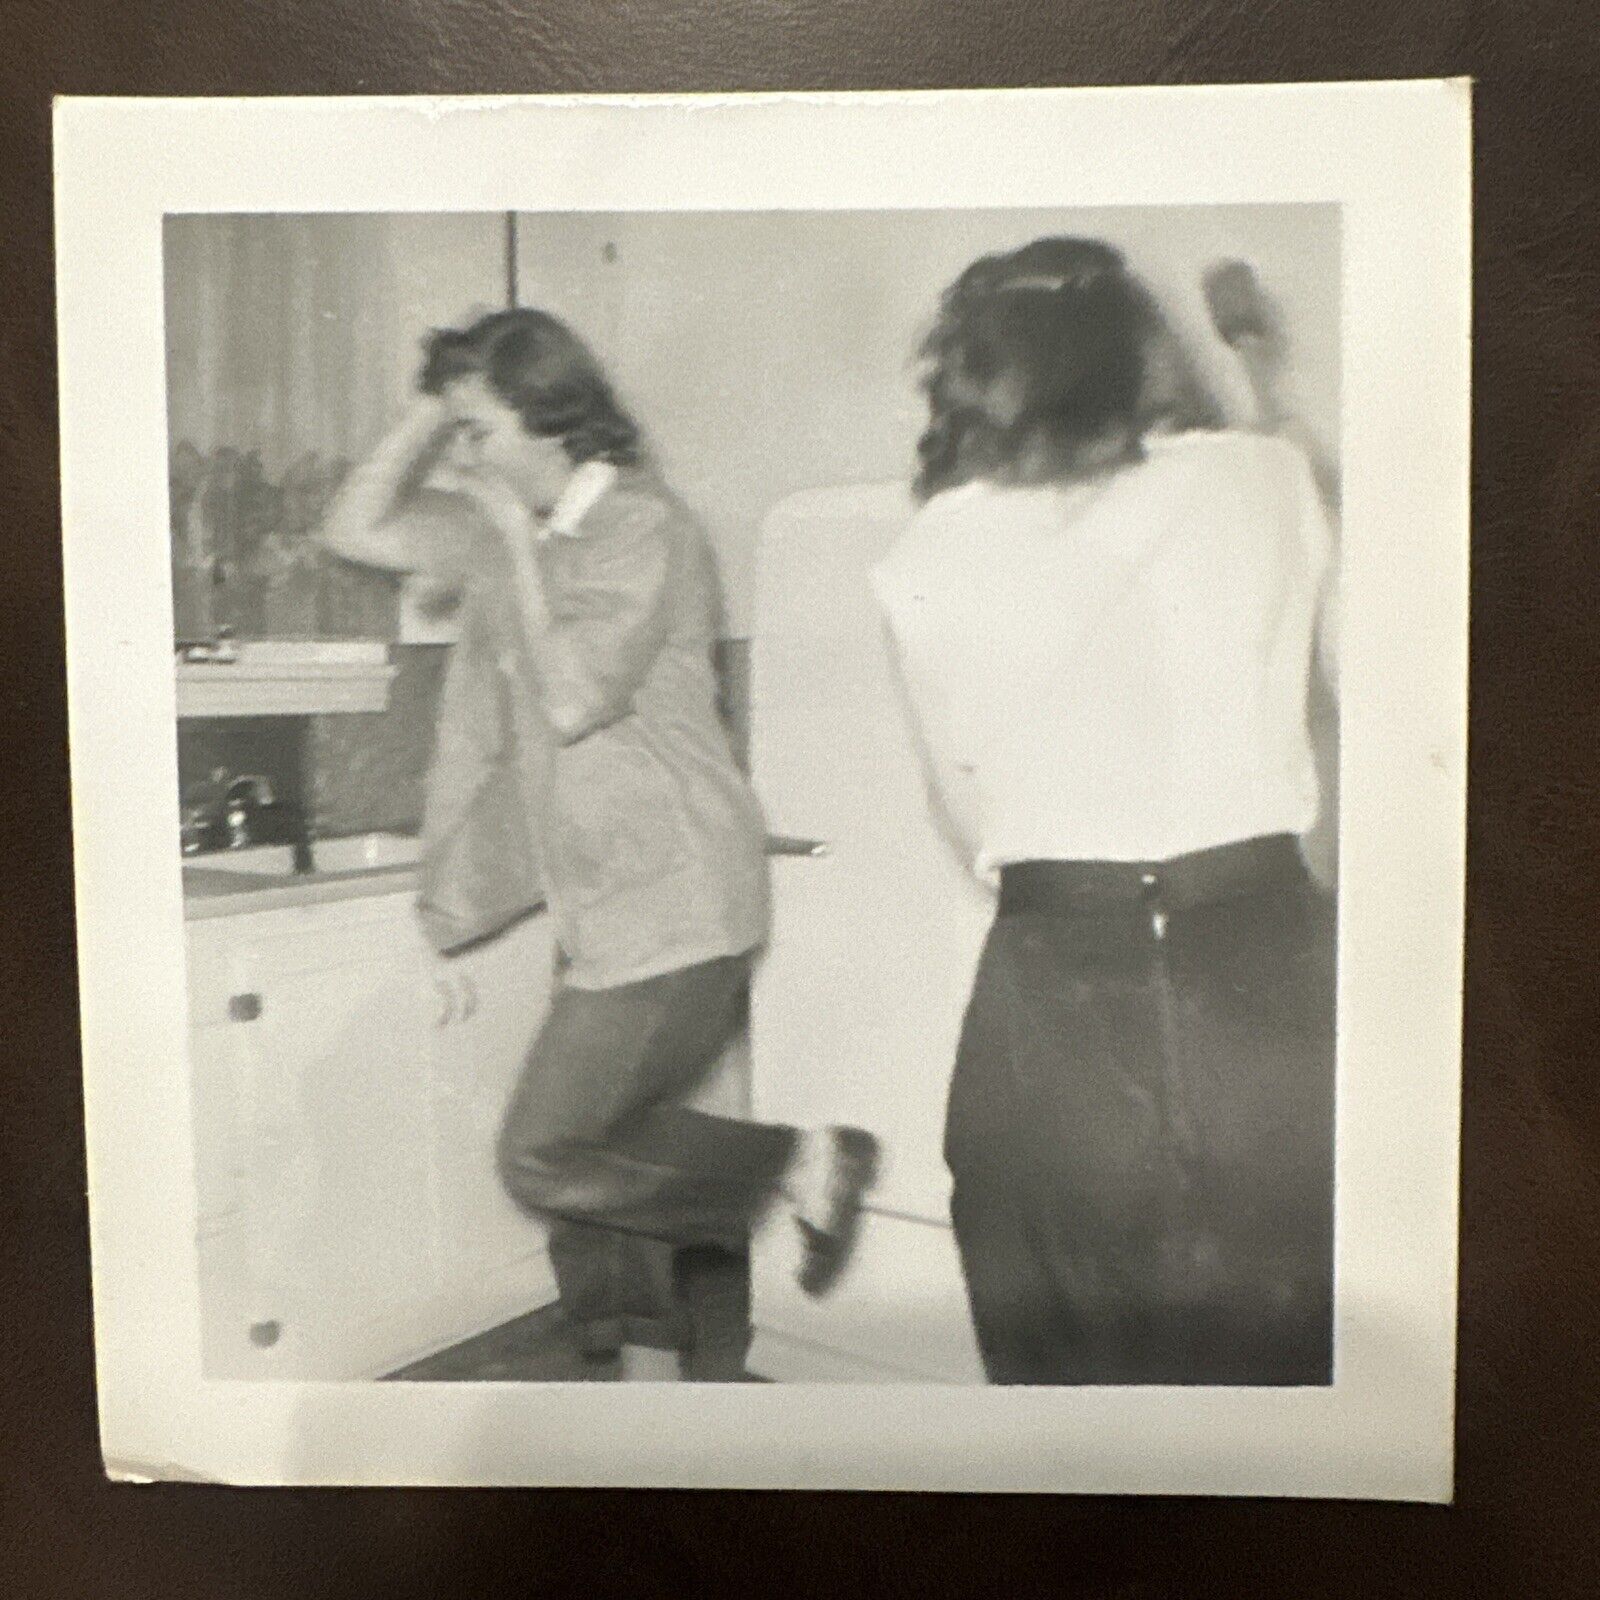 VINTAGE PHOTO 1950s girls dancing in the kitchen. Silly fun ORIGINAL SNAPSHOT